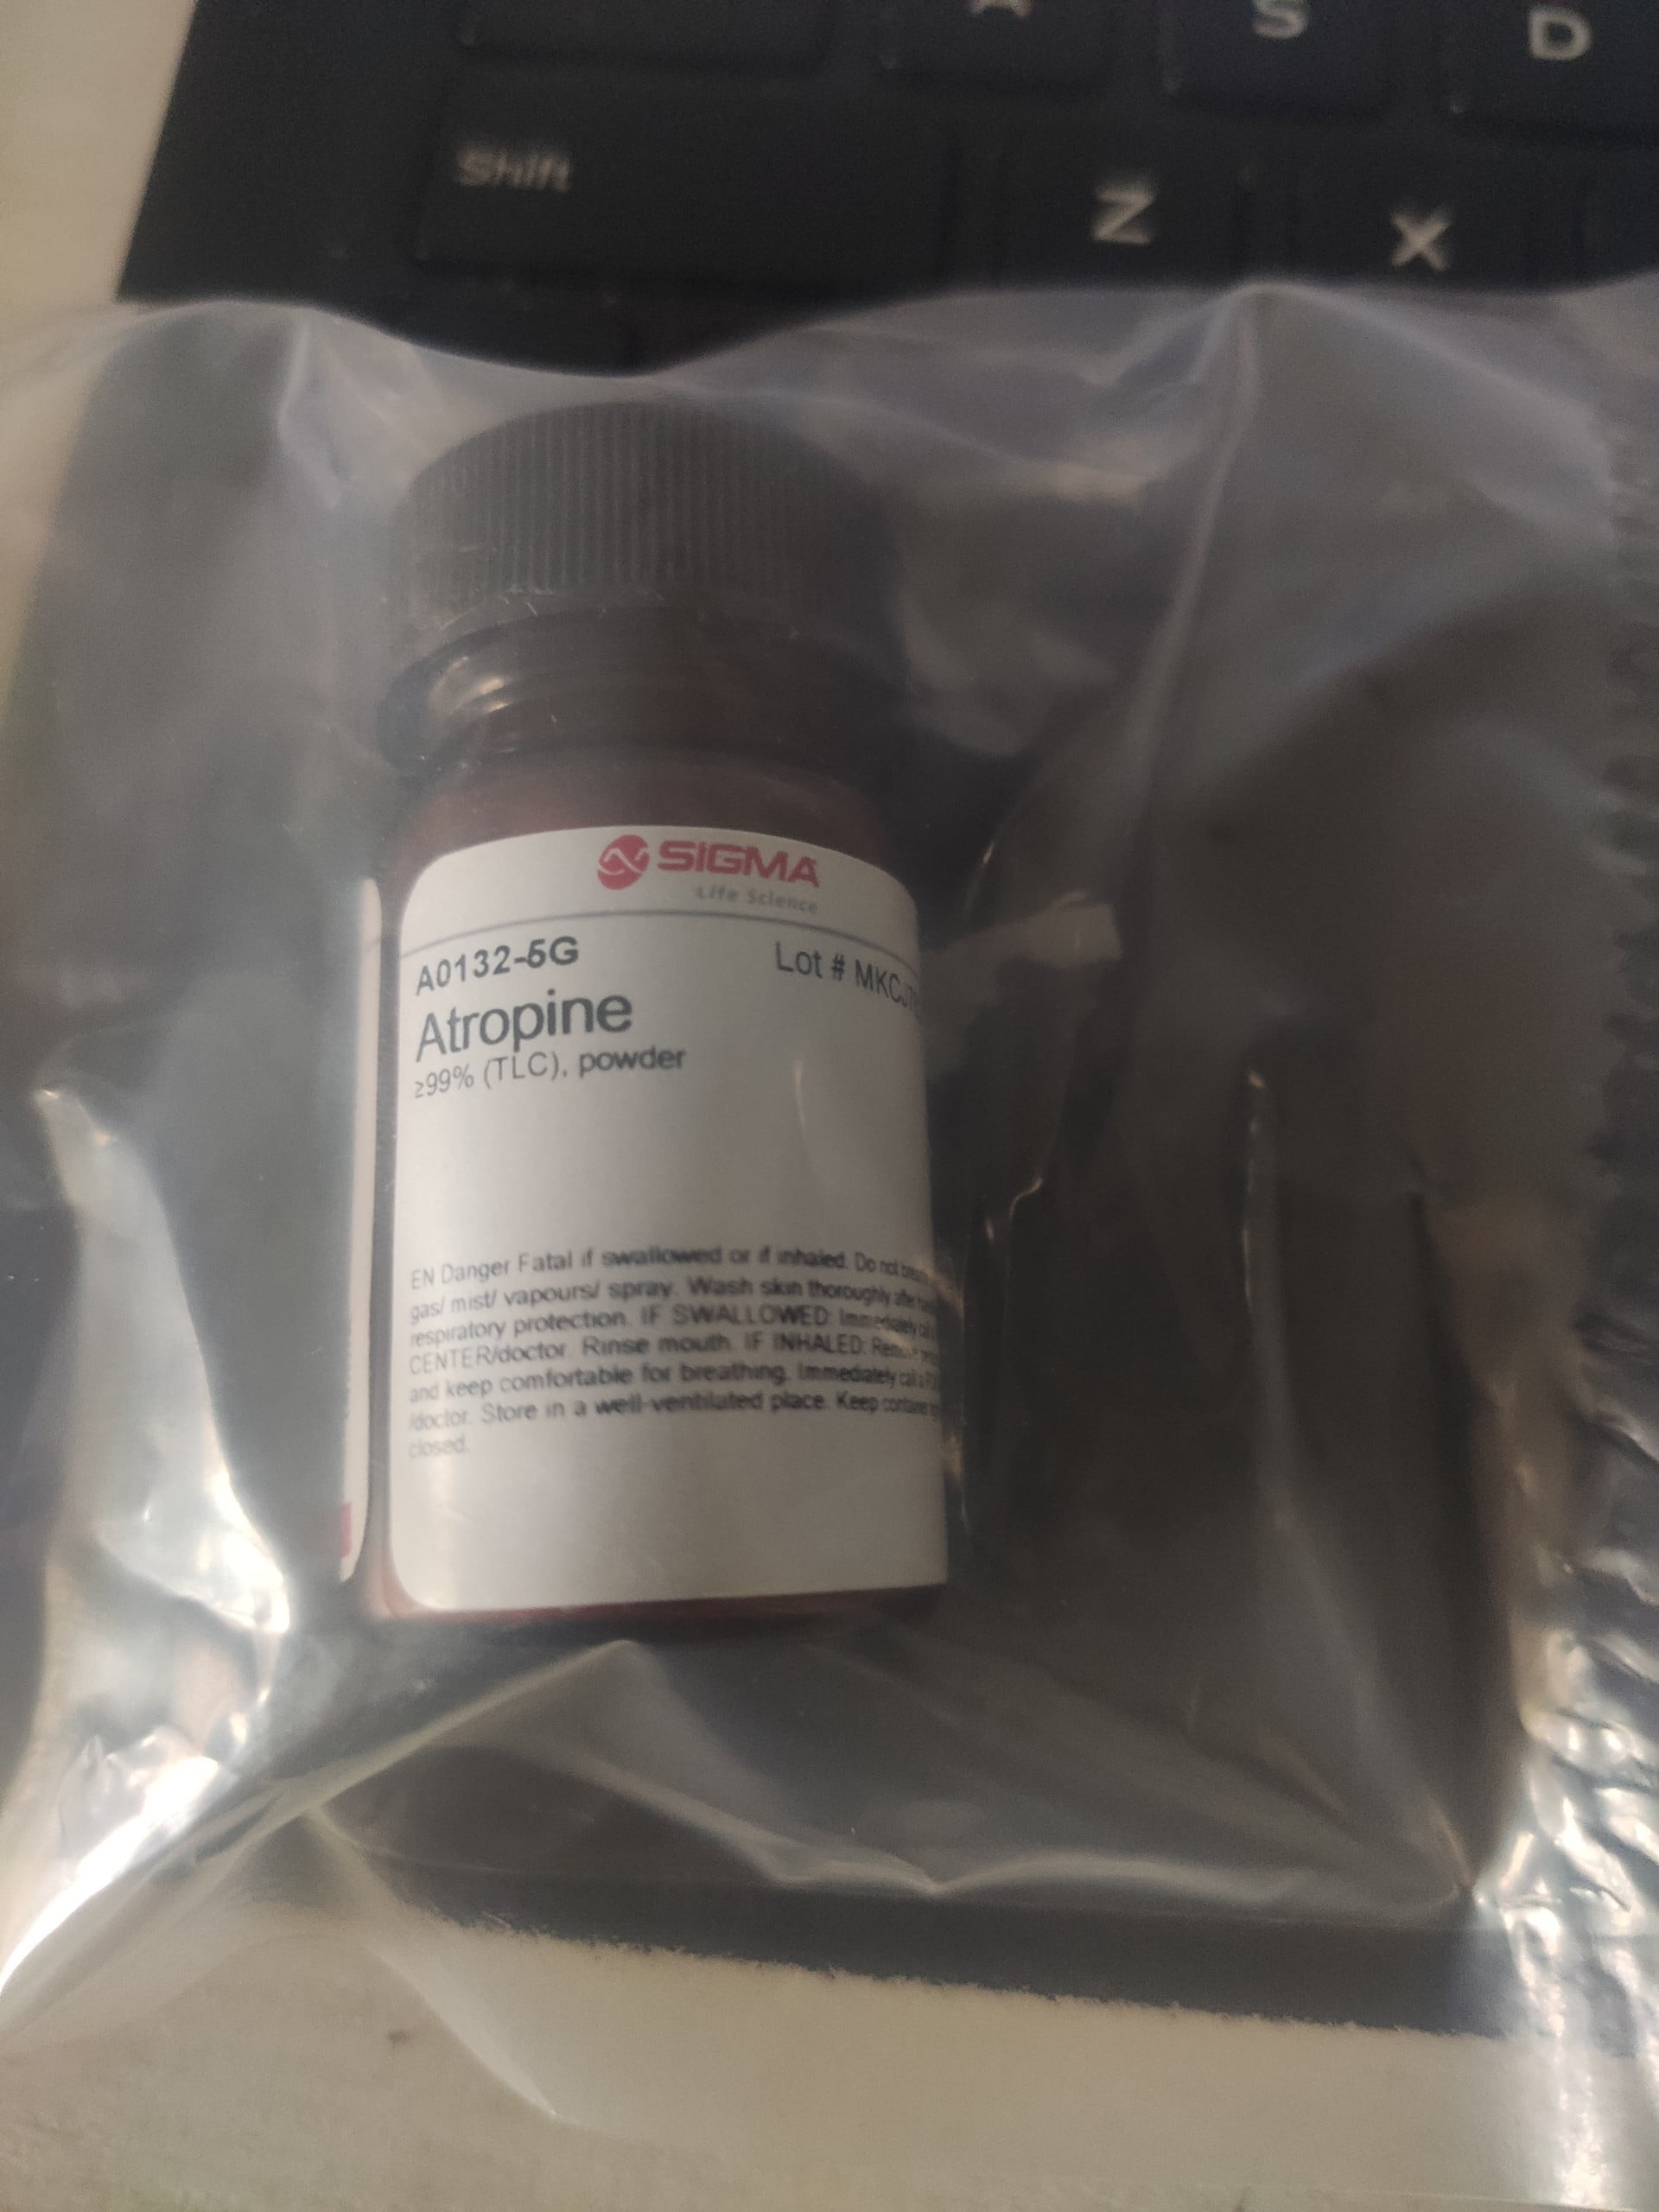 Atropine ≥99% (TLC), powder